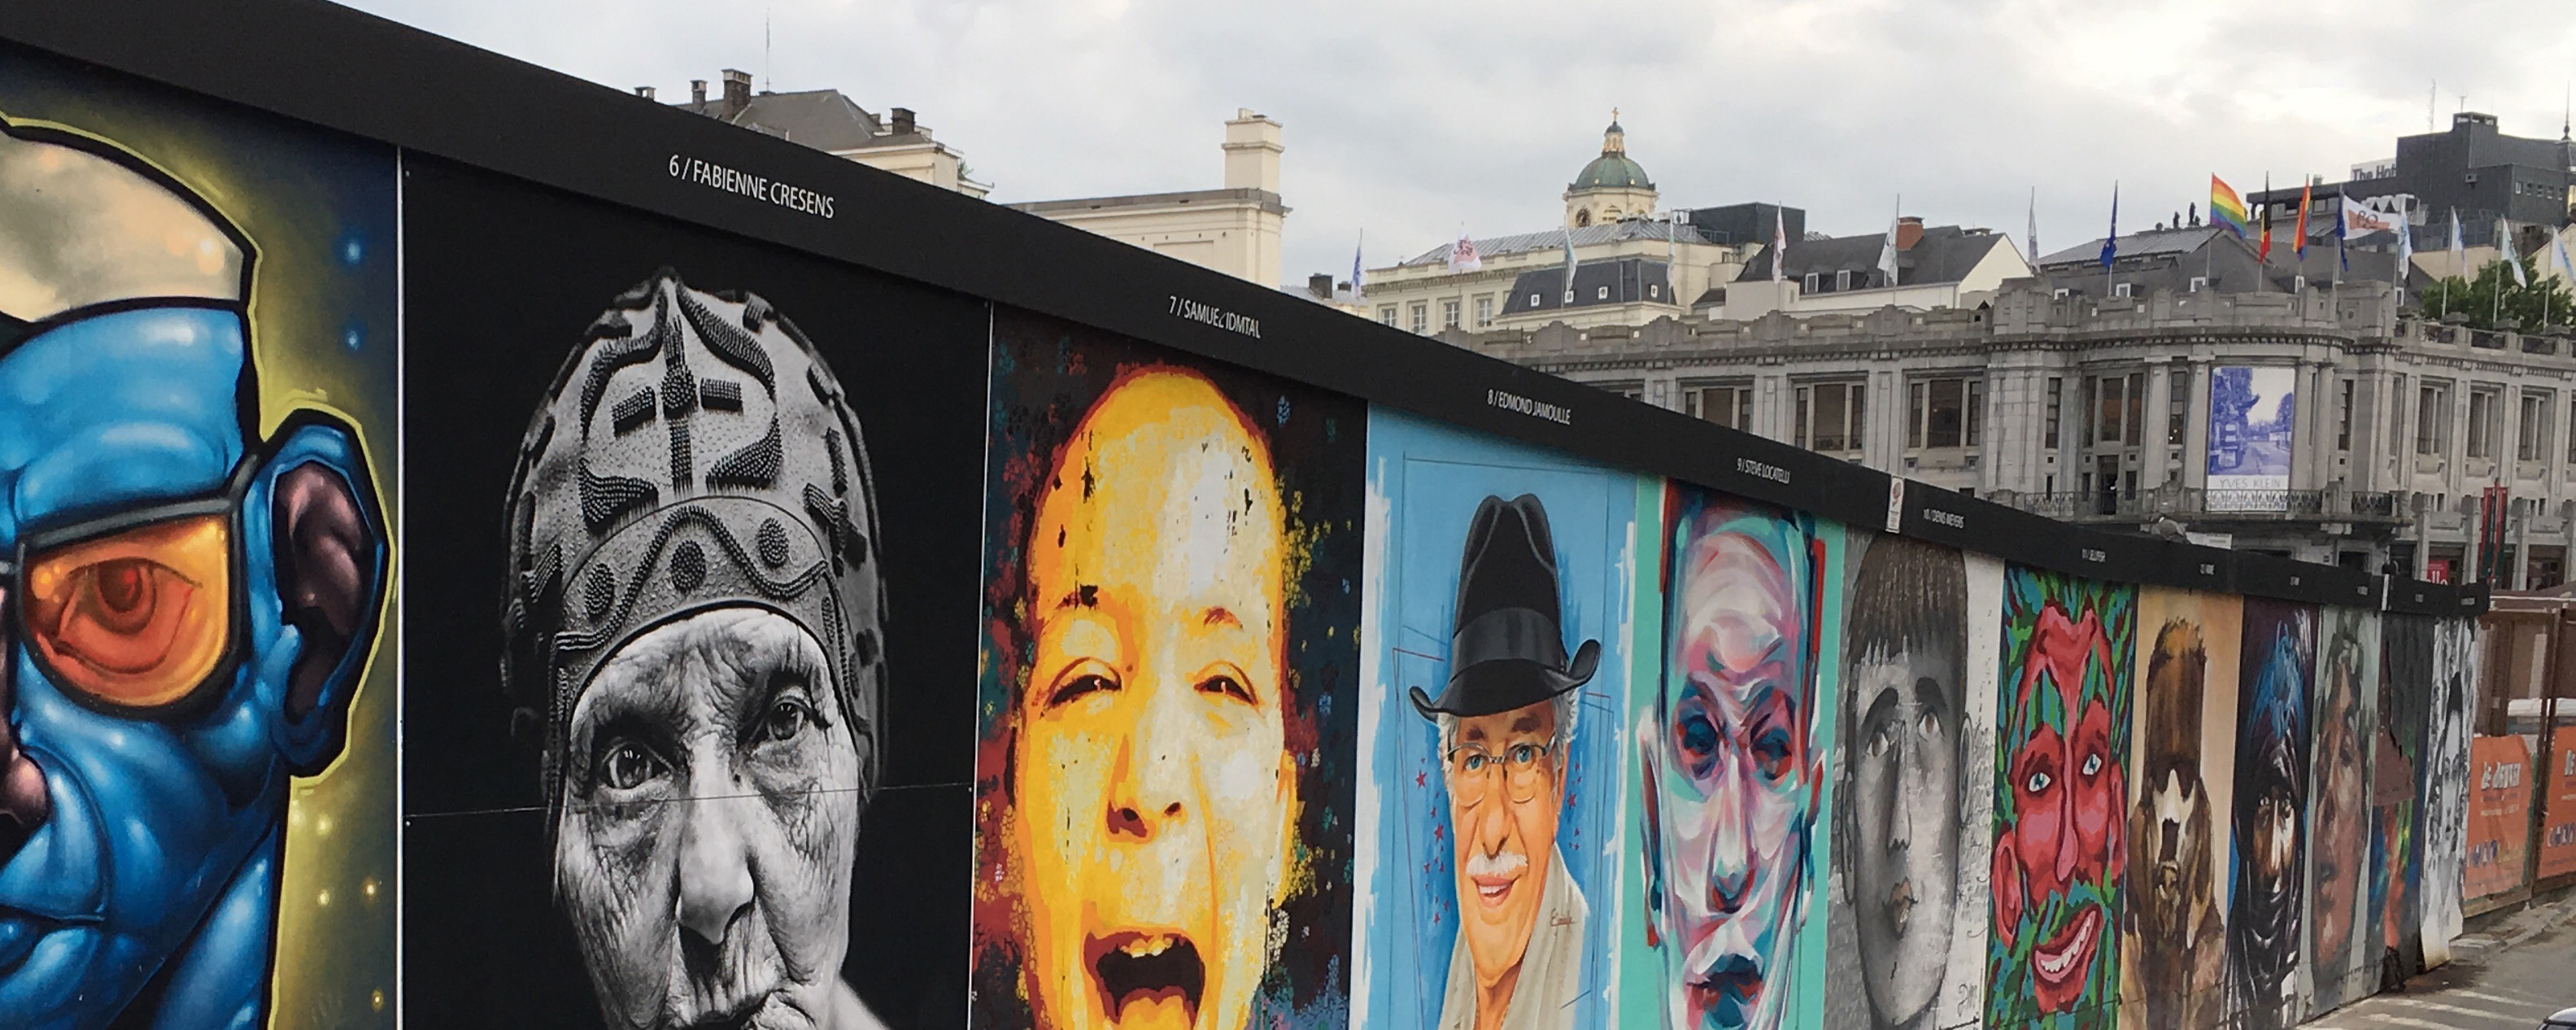 Street art in Rue Ravenstein, Brussels, Belgium of 40 portraits by 40 artists on temporary walls around building works